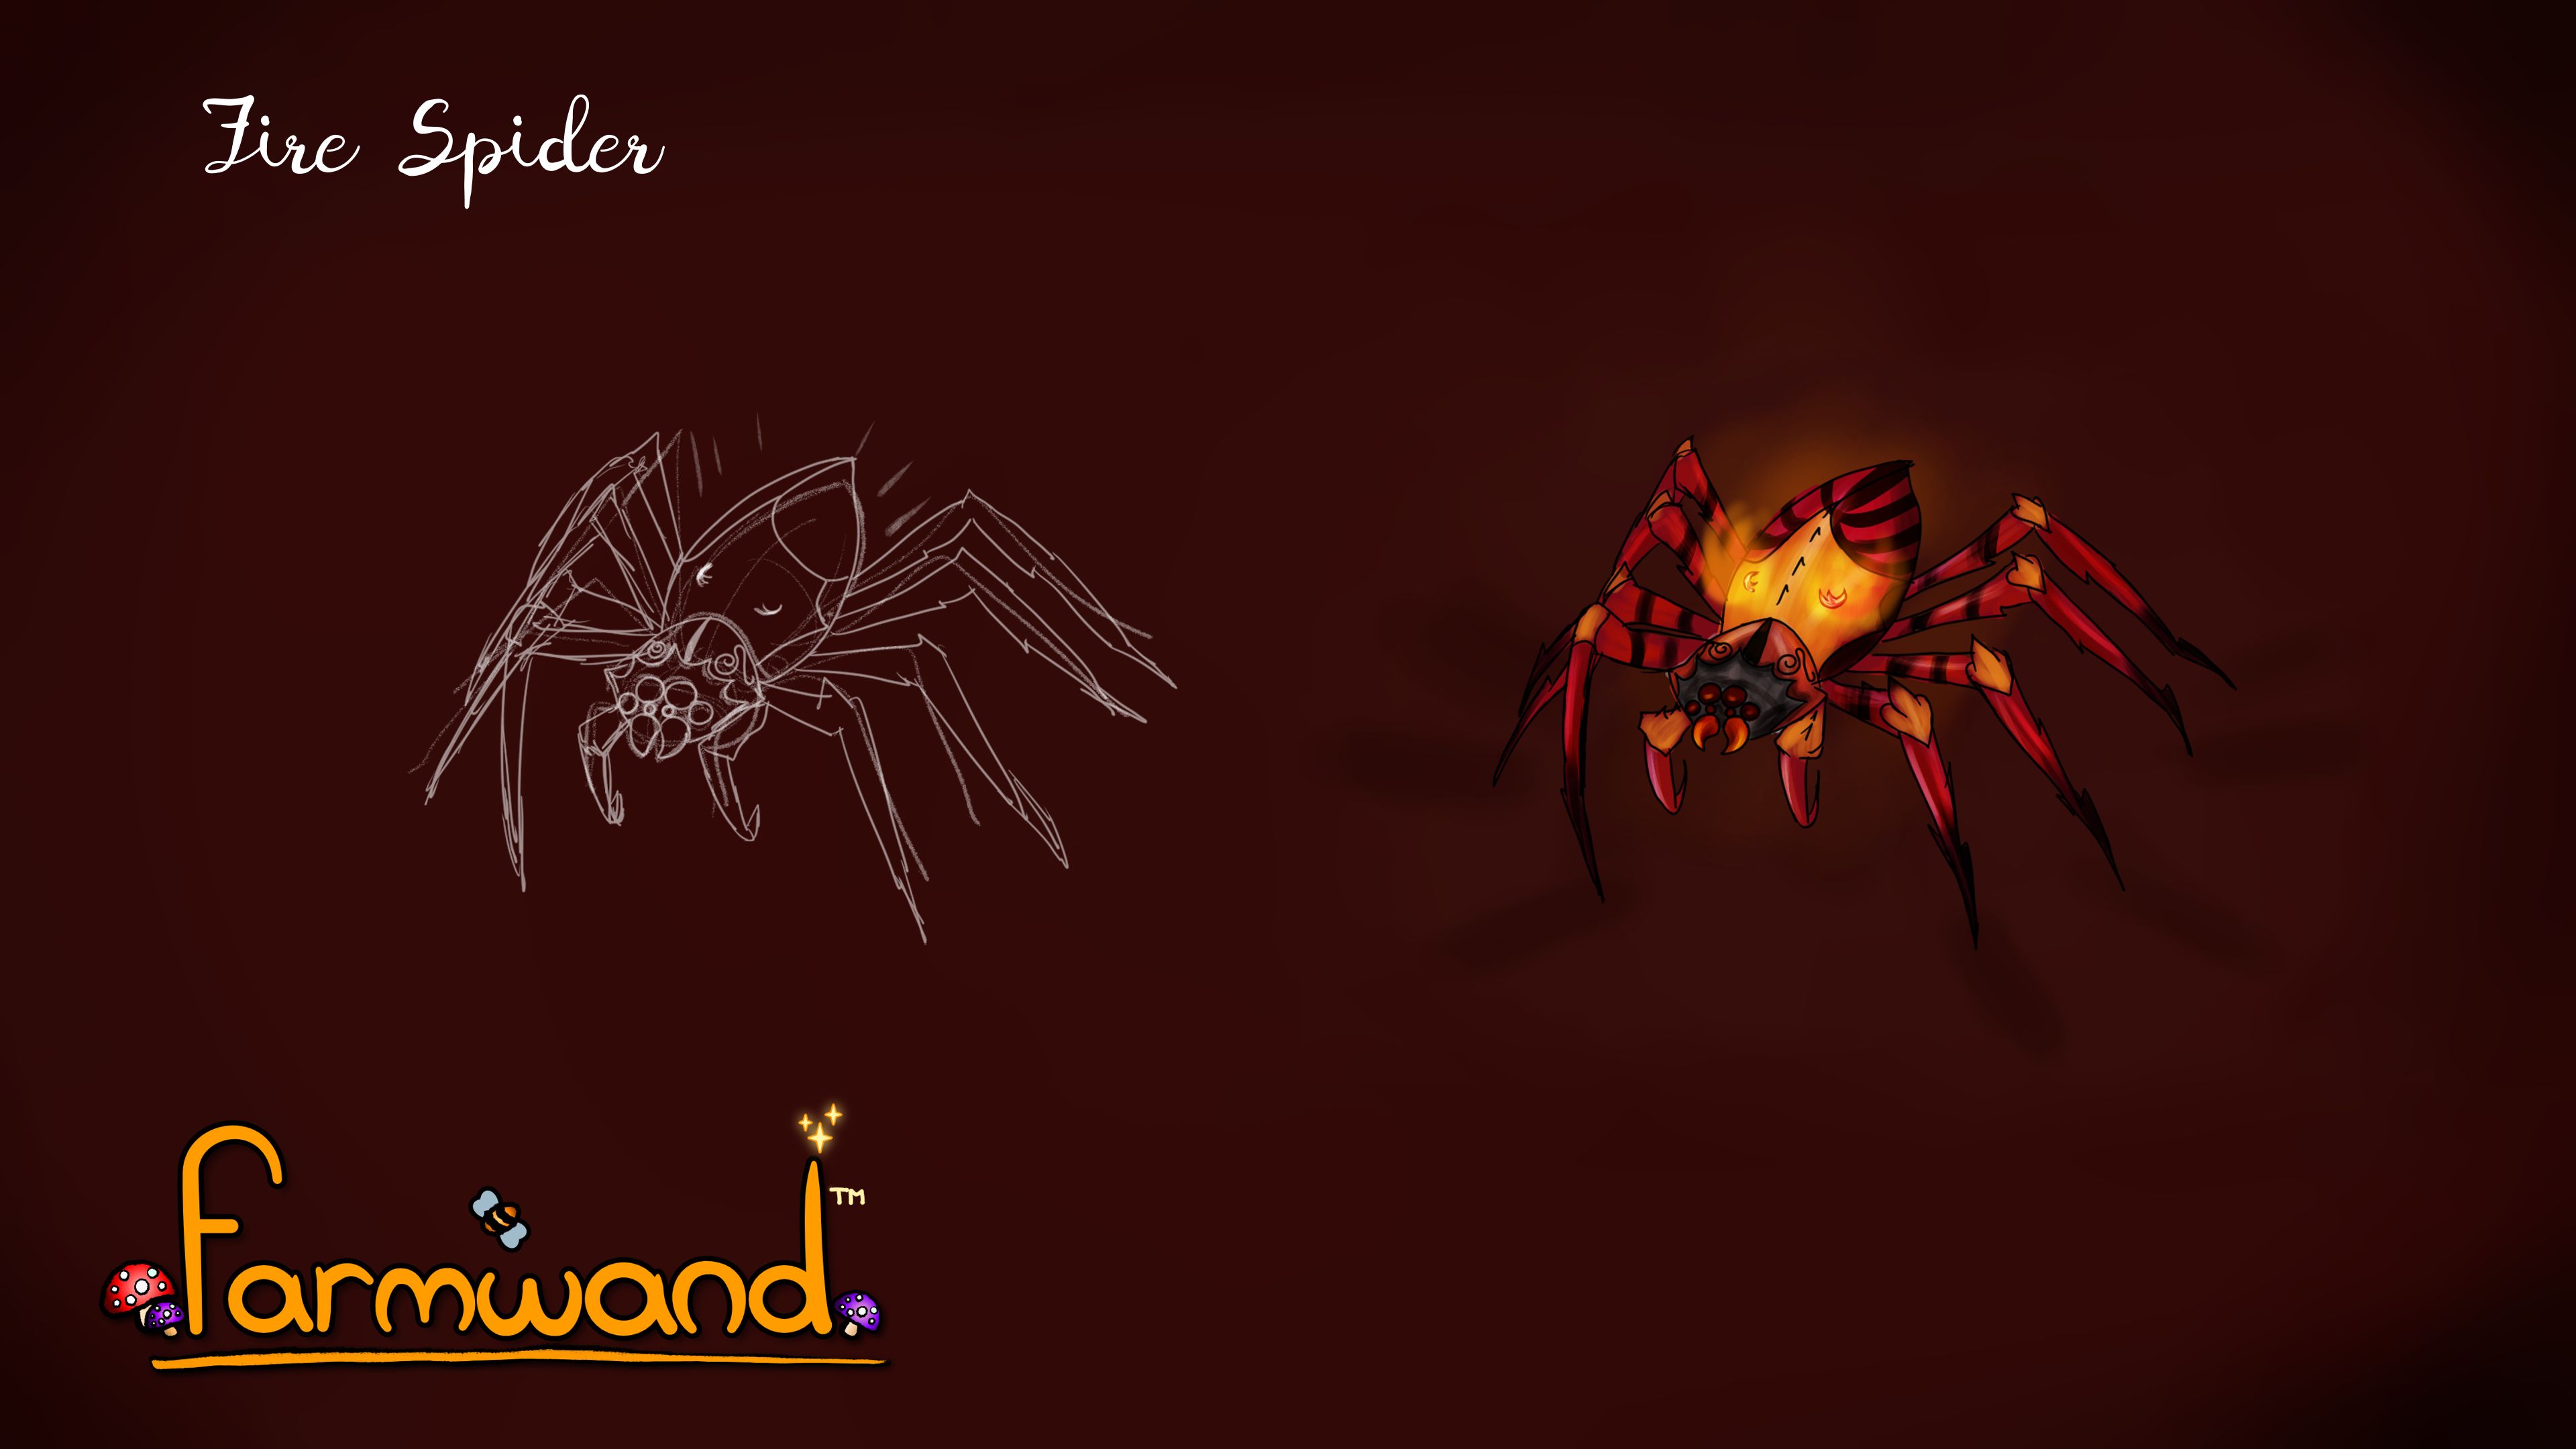 Fire Spider - Concept Art